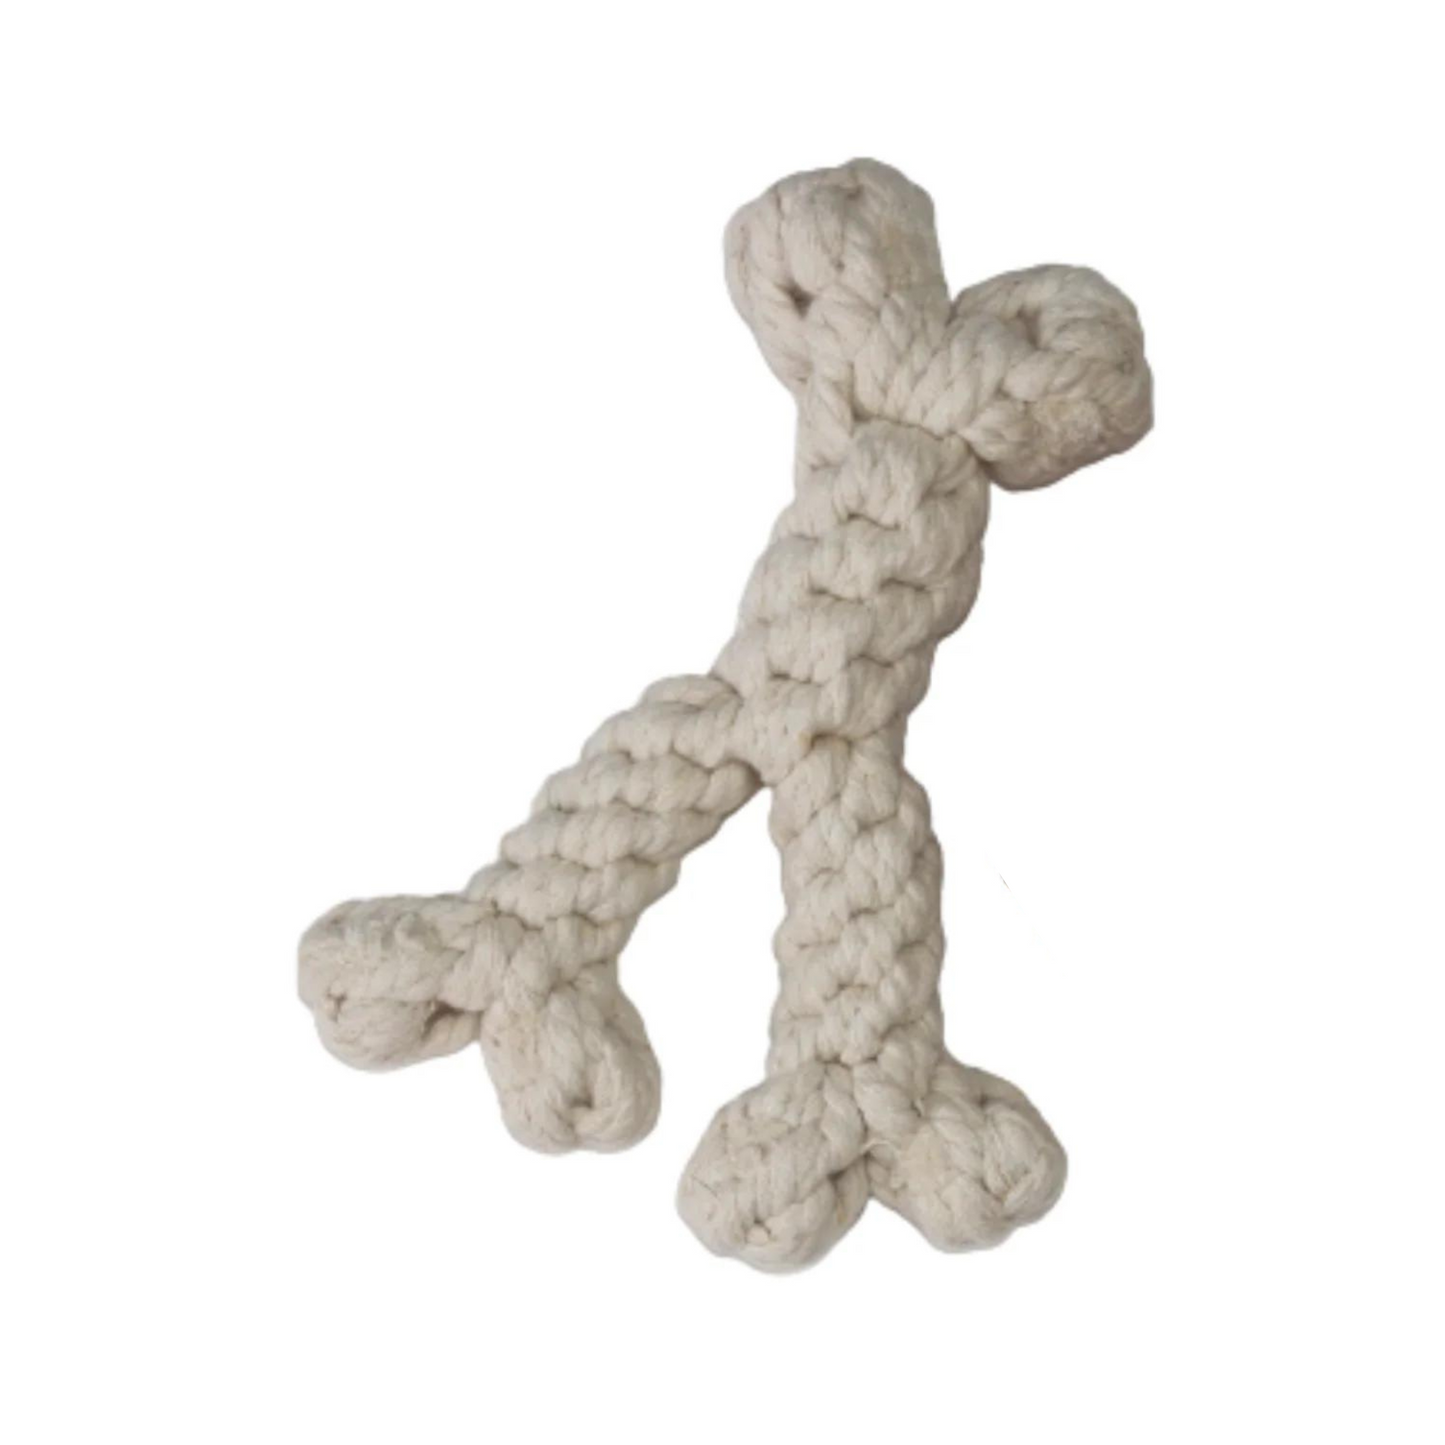 Midlee Thanksgiving Meal Rope Dog Toy Set - Turkey Leg & Wishbone